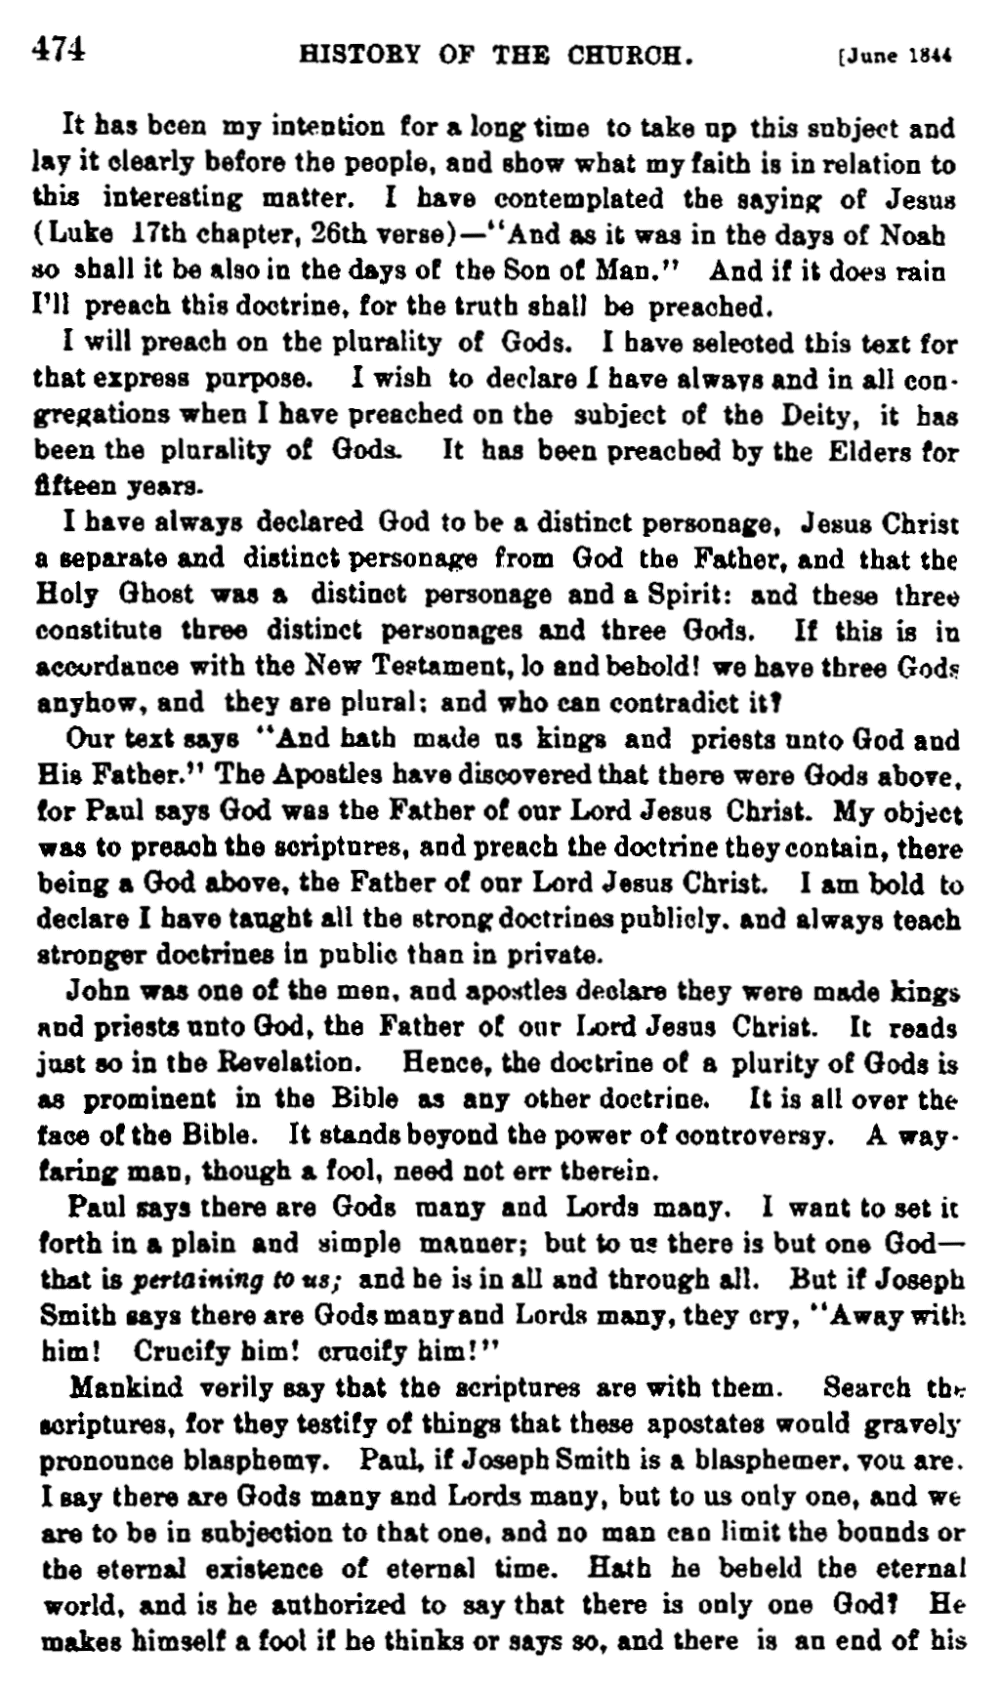 History of the Church, vol. 6, p. 474